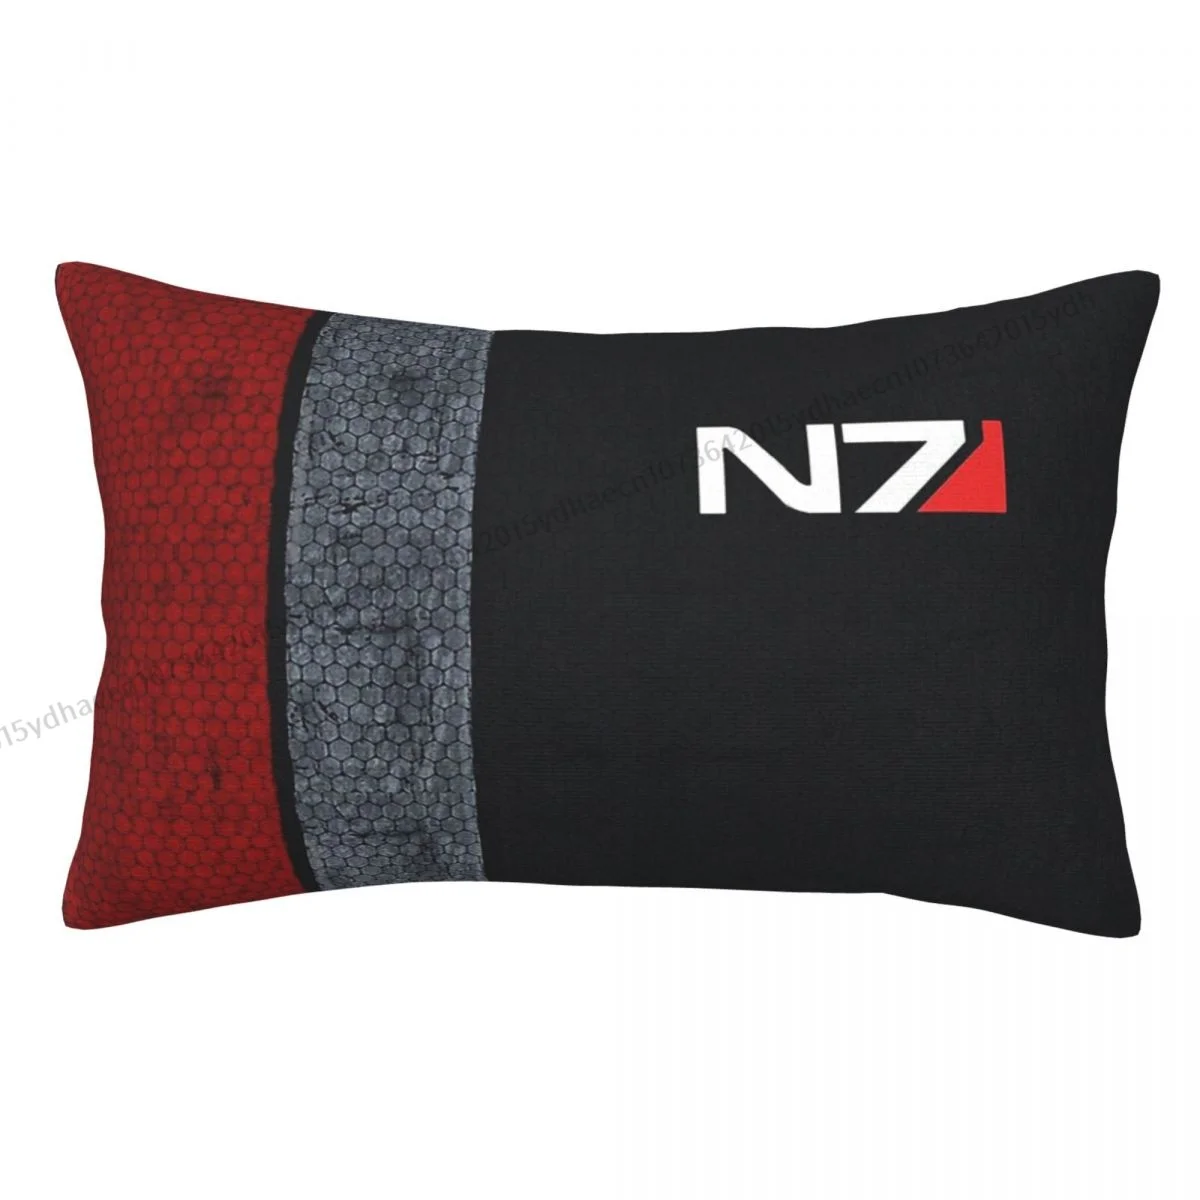 

N7 Art Cojines Pillowcase Mass Effect Game Cushion Home Sofa Chair Print Decorative Coussin Pillow Covers